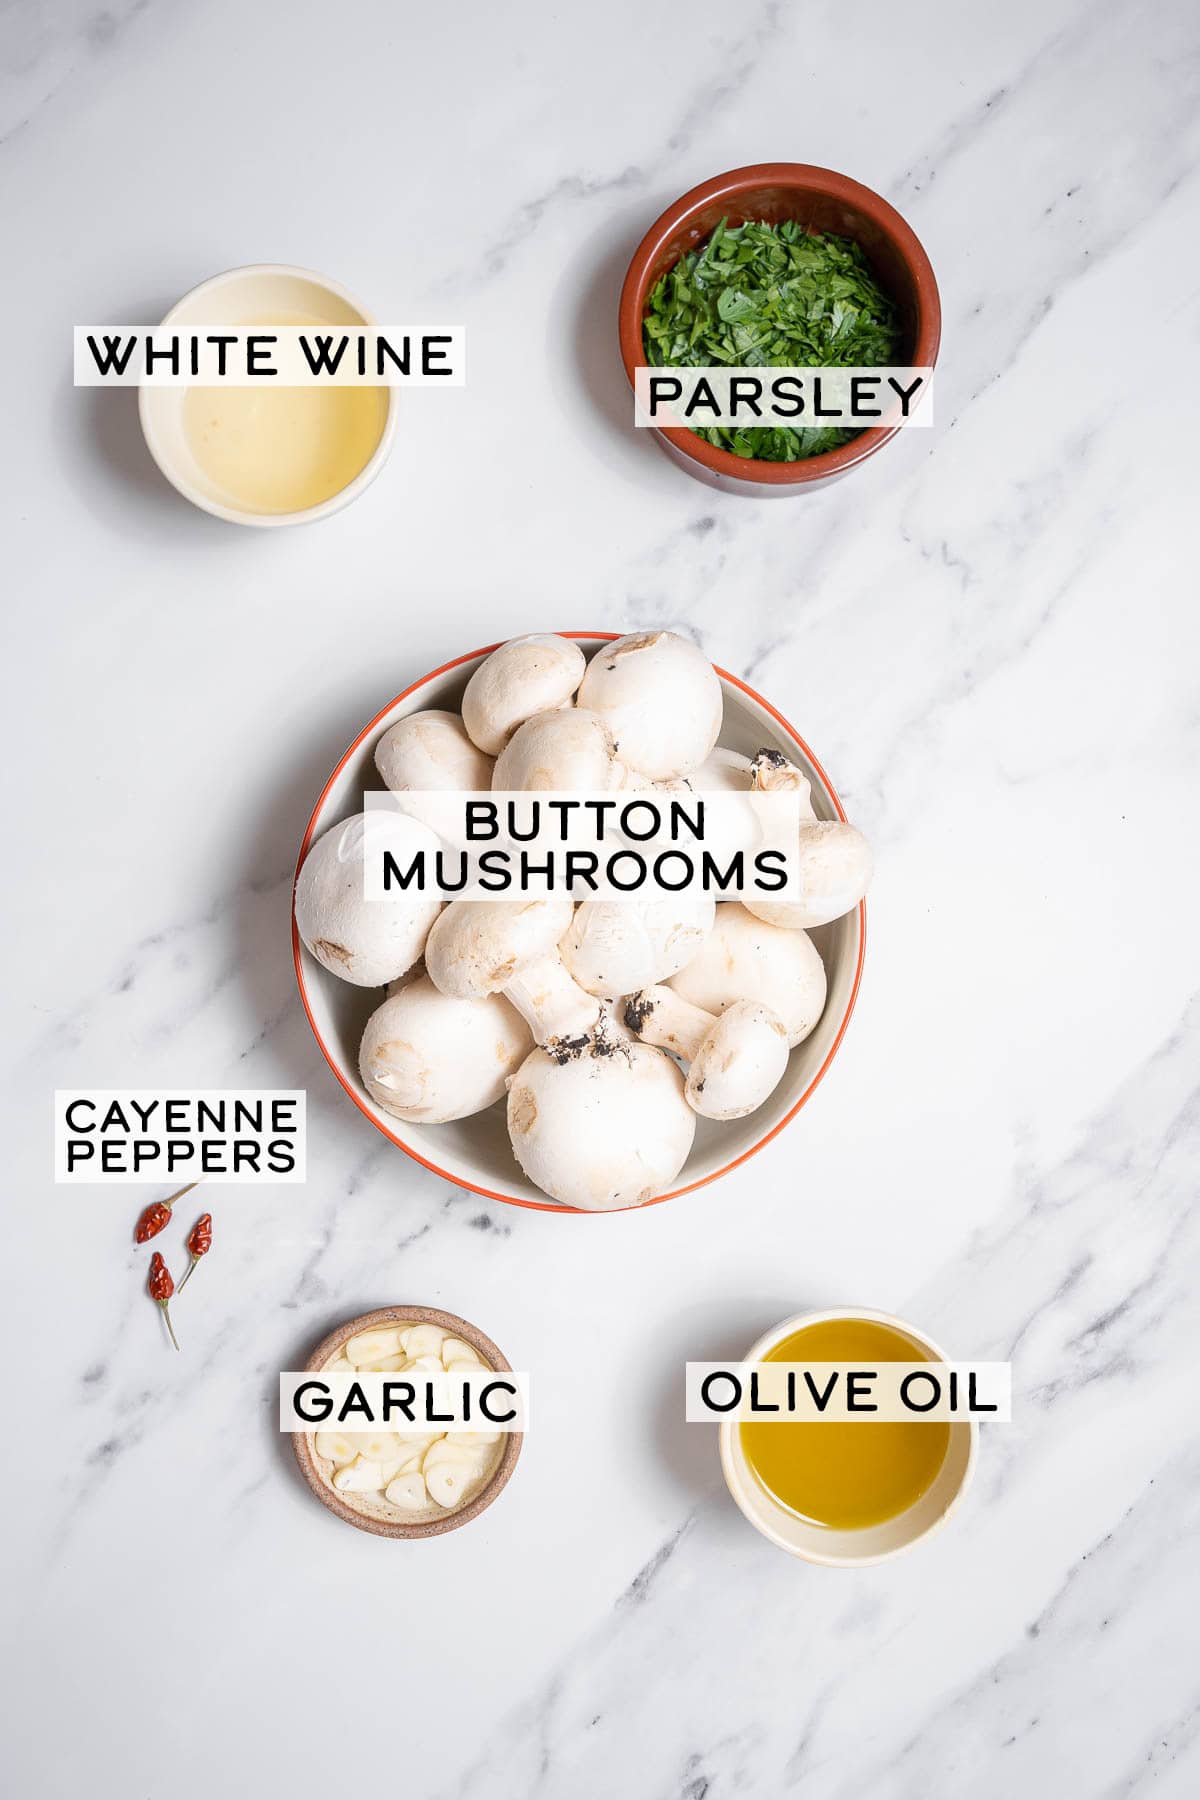 bowls of ingredients for Spanish garlic mushrooms.